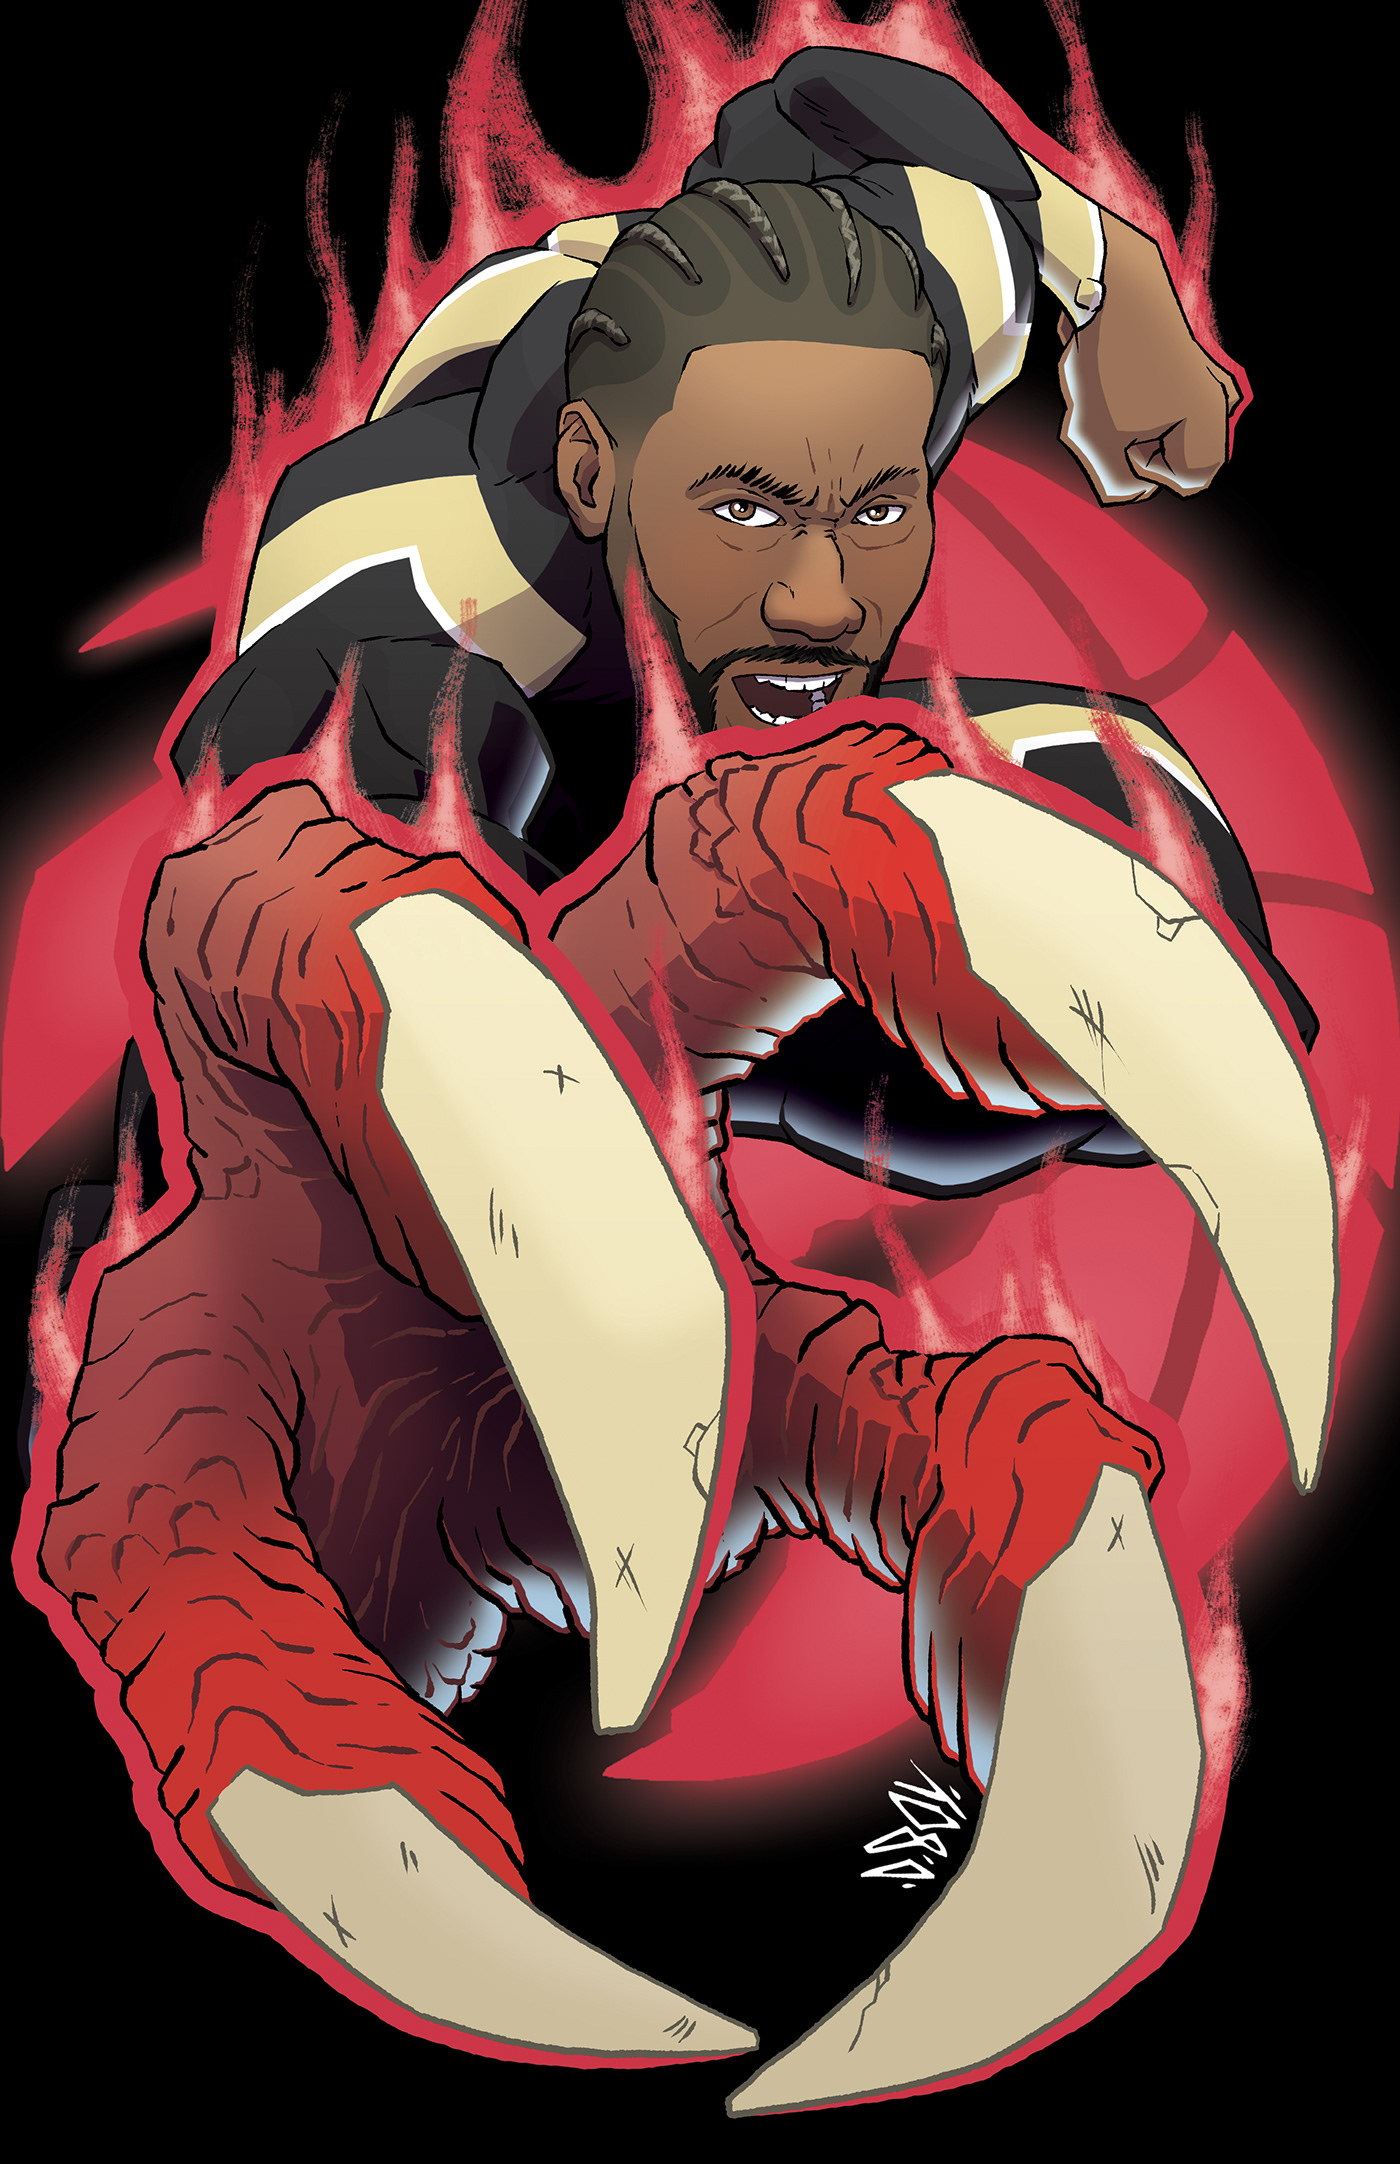 kawhi leonard basketball Toronto raptors NBA SuperHero comics comicbook manga anime